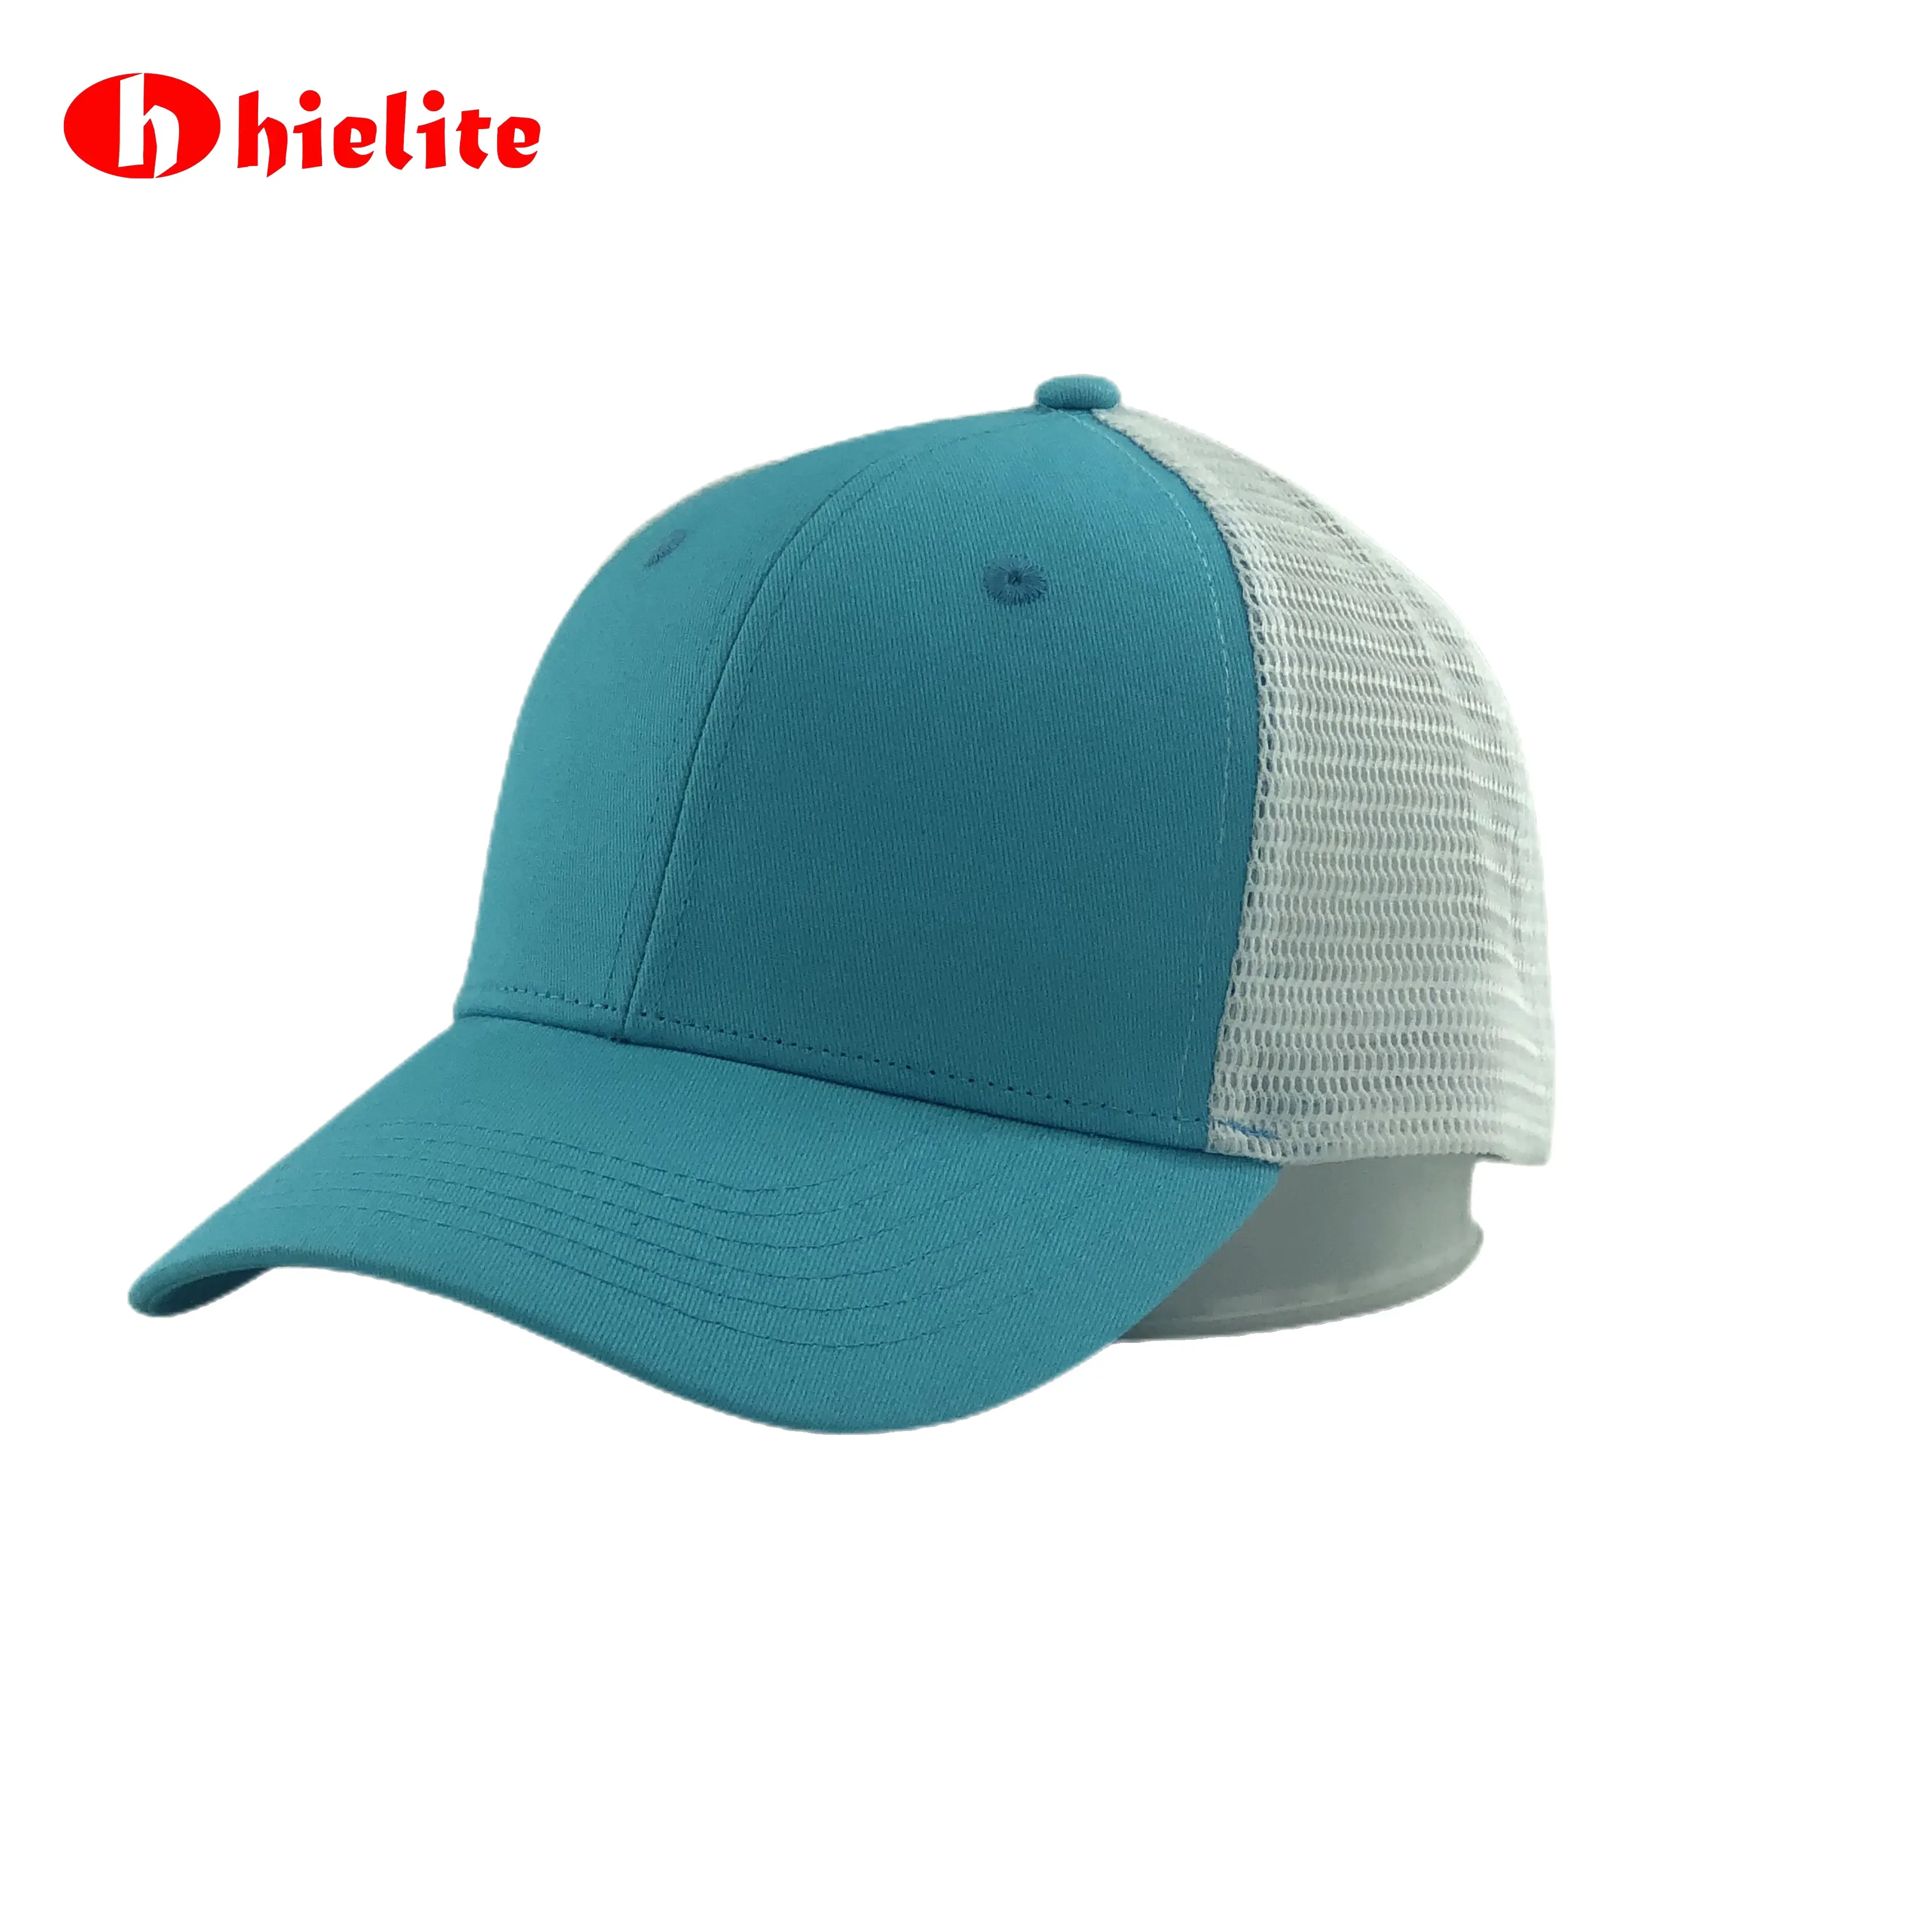 100% Polyester Mesh Back Snap Back Adjustable Men Trucker Hat Cap For Hunting Fishing 4 Colors Blue Black Red Brown